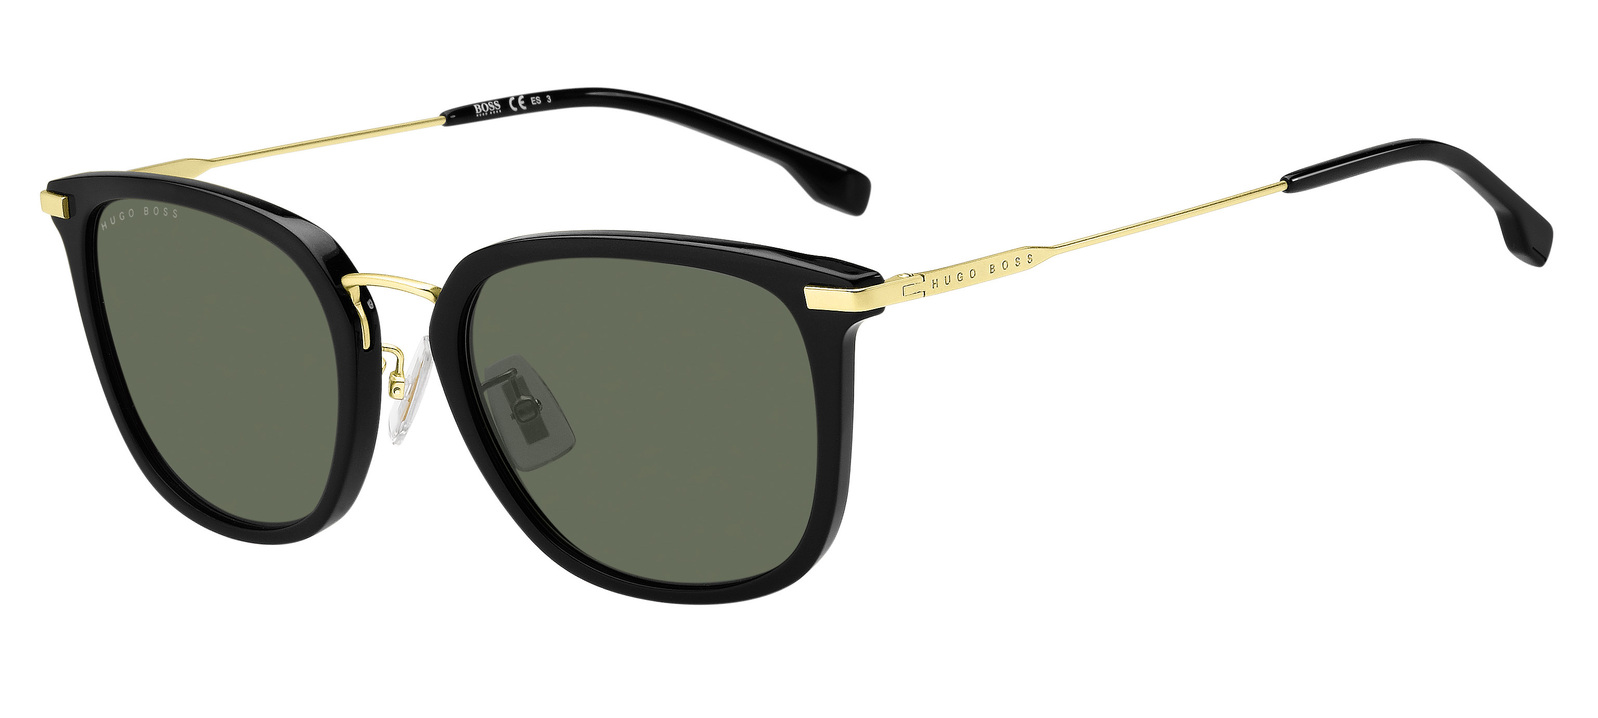 Boss Unisex-Adult's 0761/S NR Sunglasses, Mtblk Black, 60 : Amazon.co.uk:  Fashion